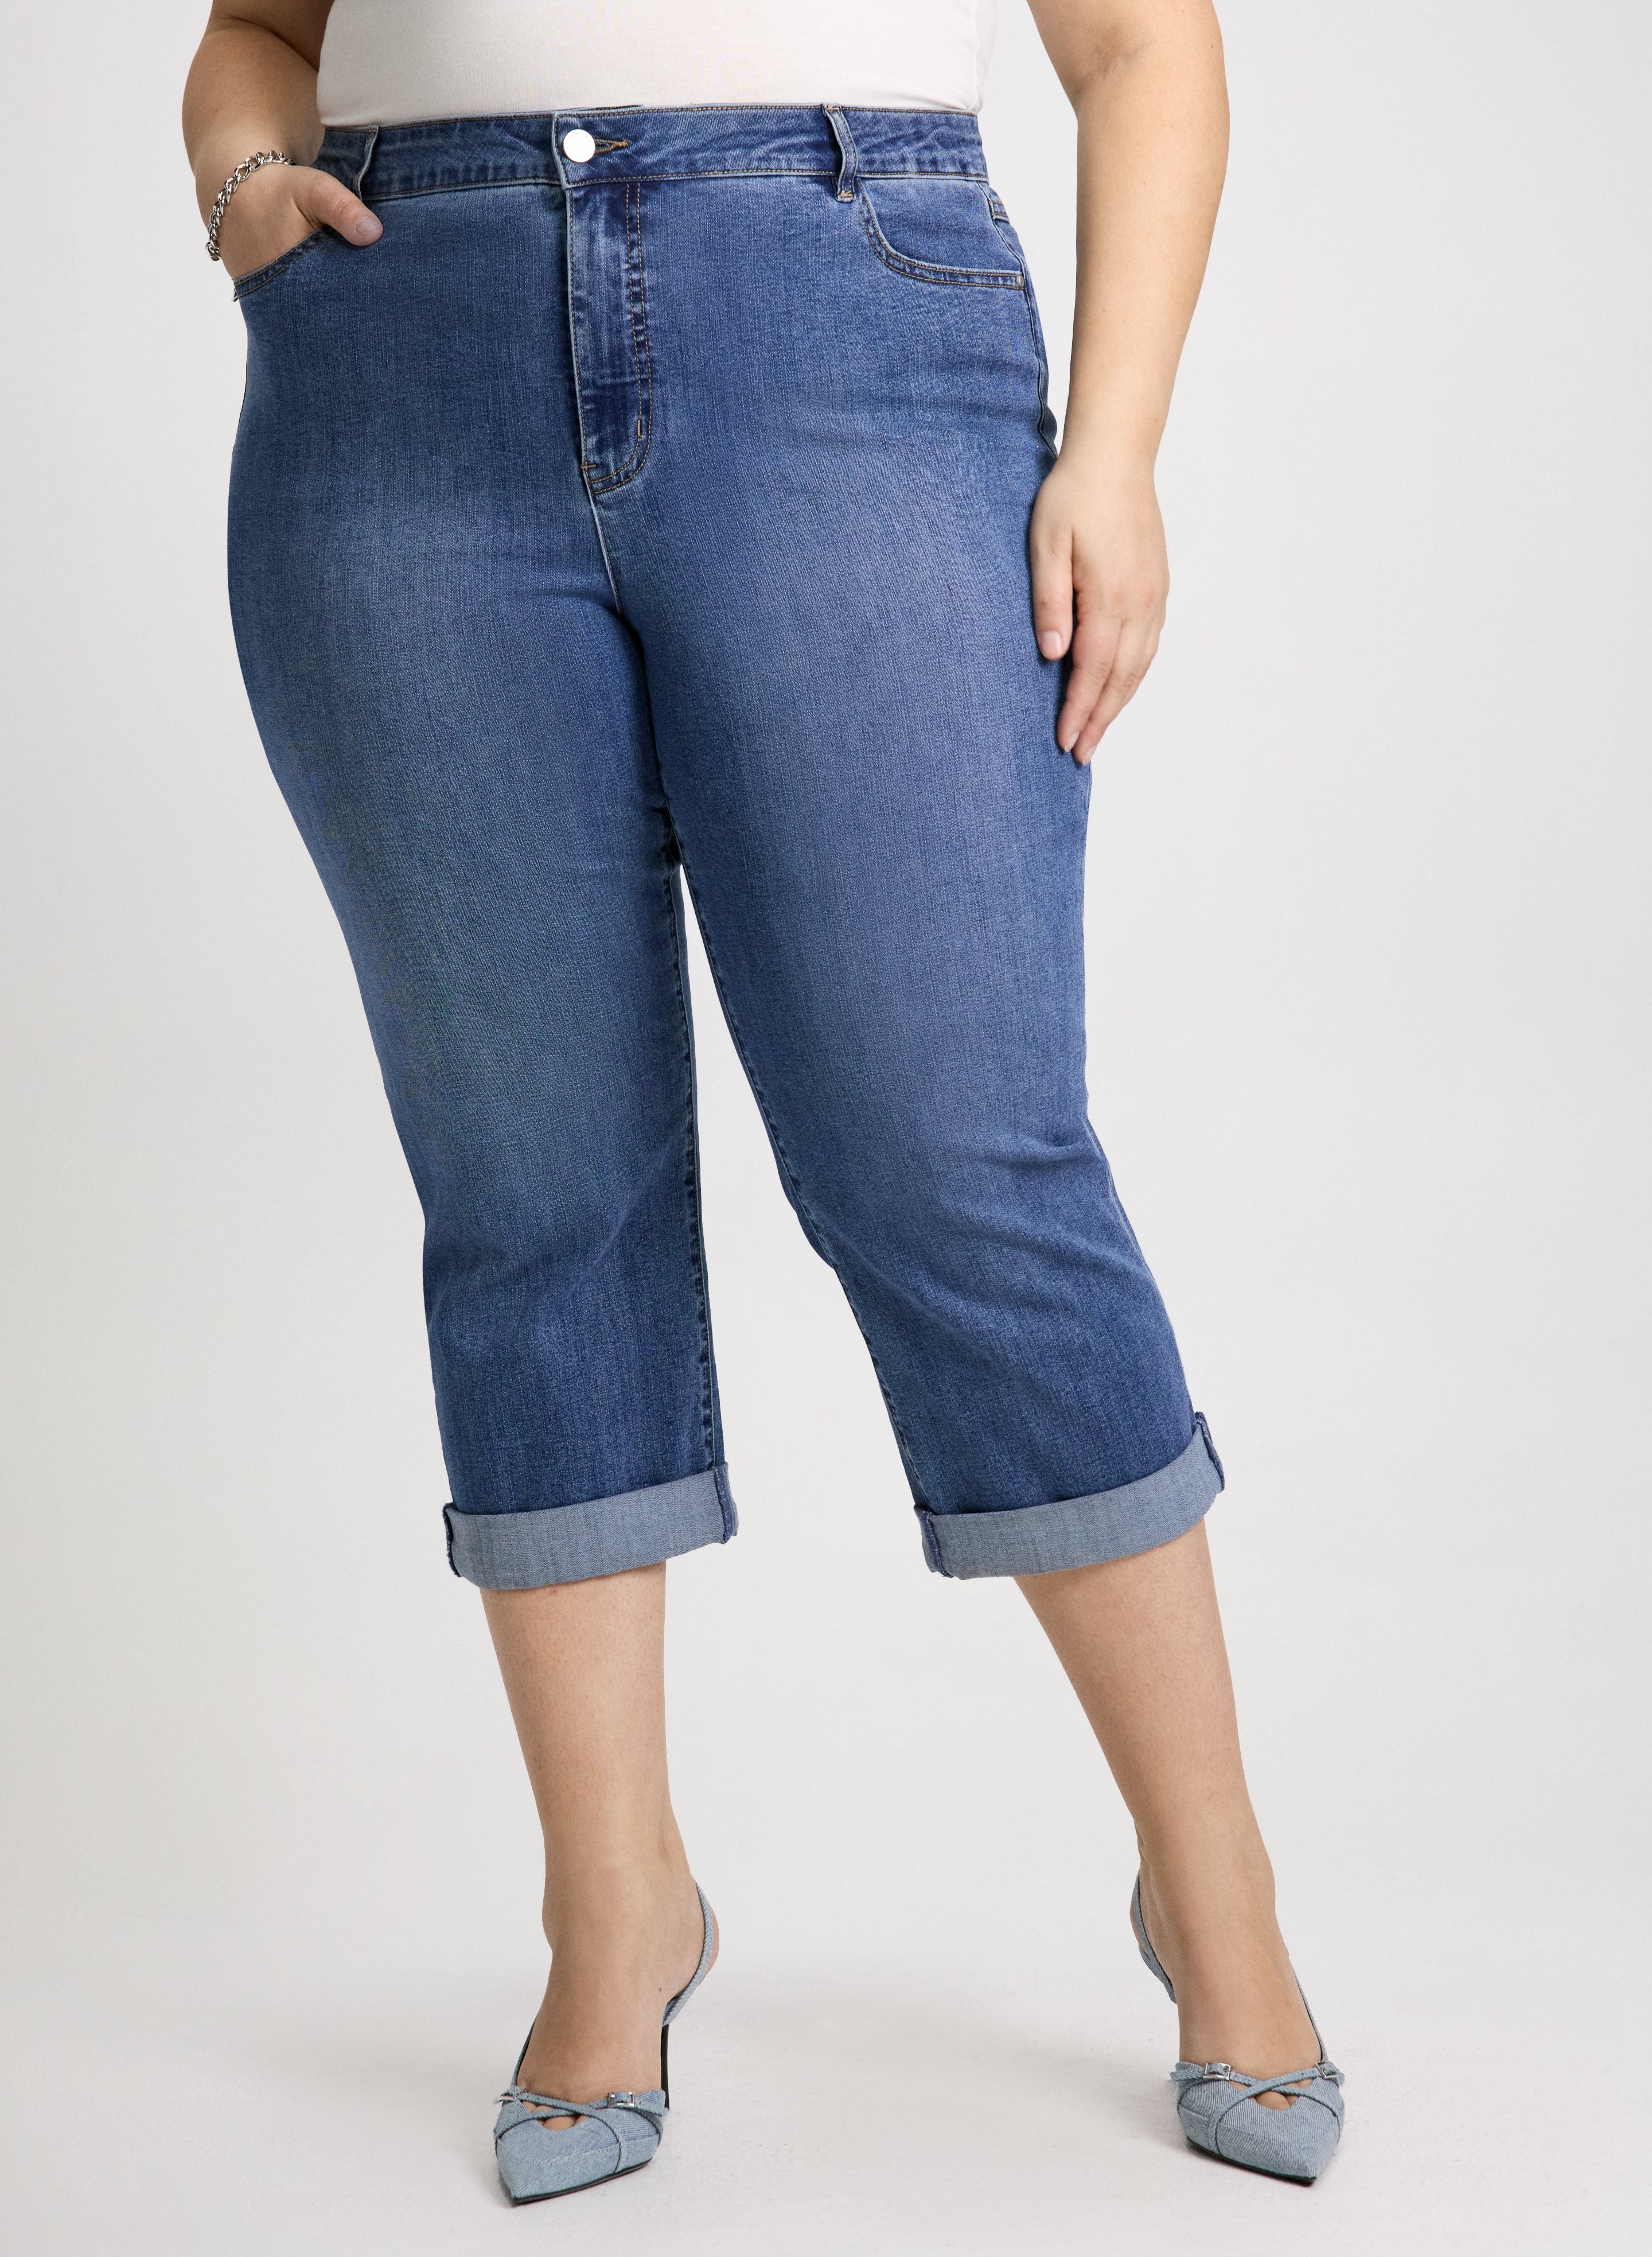 luvamia Women's High Waist Capri Pants Classic Denim Capris for Women  Stretchy with Pockets, 2XL, Fit Size 20 Size 22